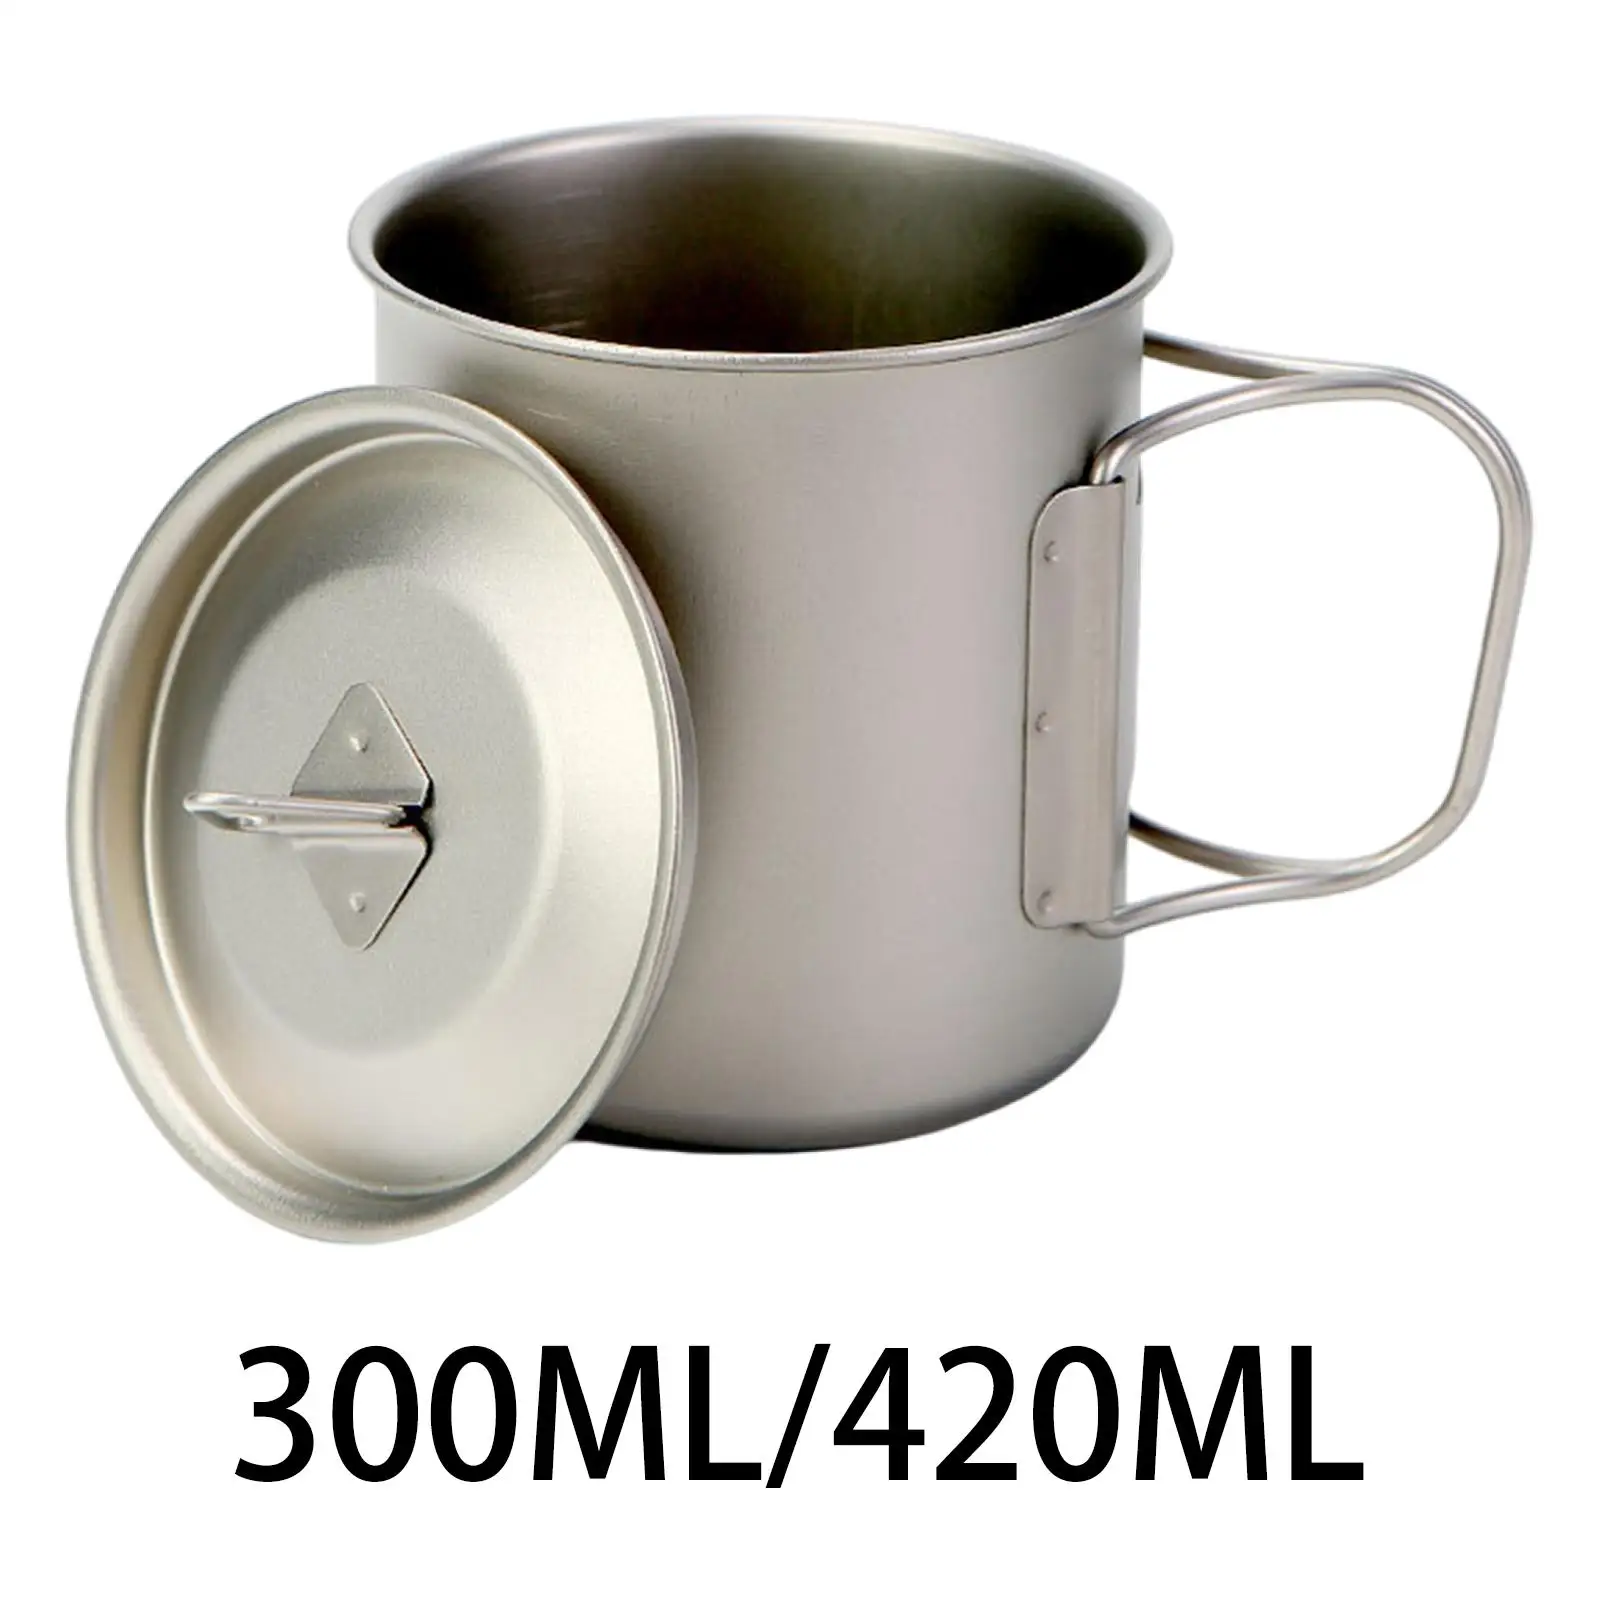 300ml/420ml Camping Tea Mug Drinkware Titanium Cup for Indoor Outdoor Picnic